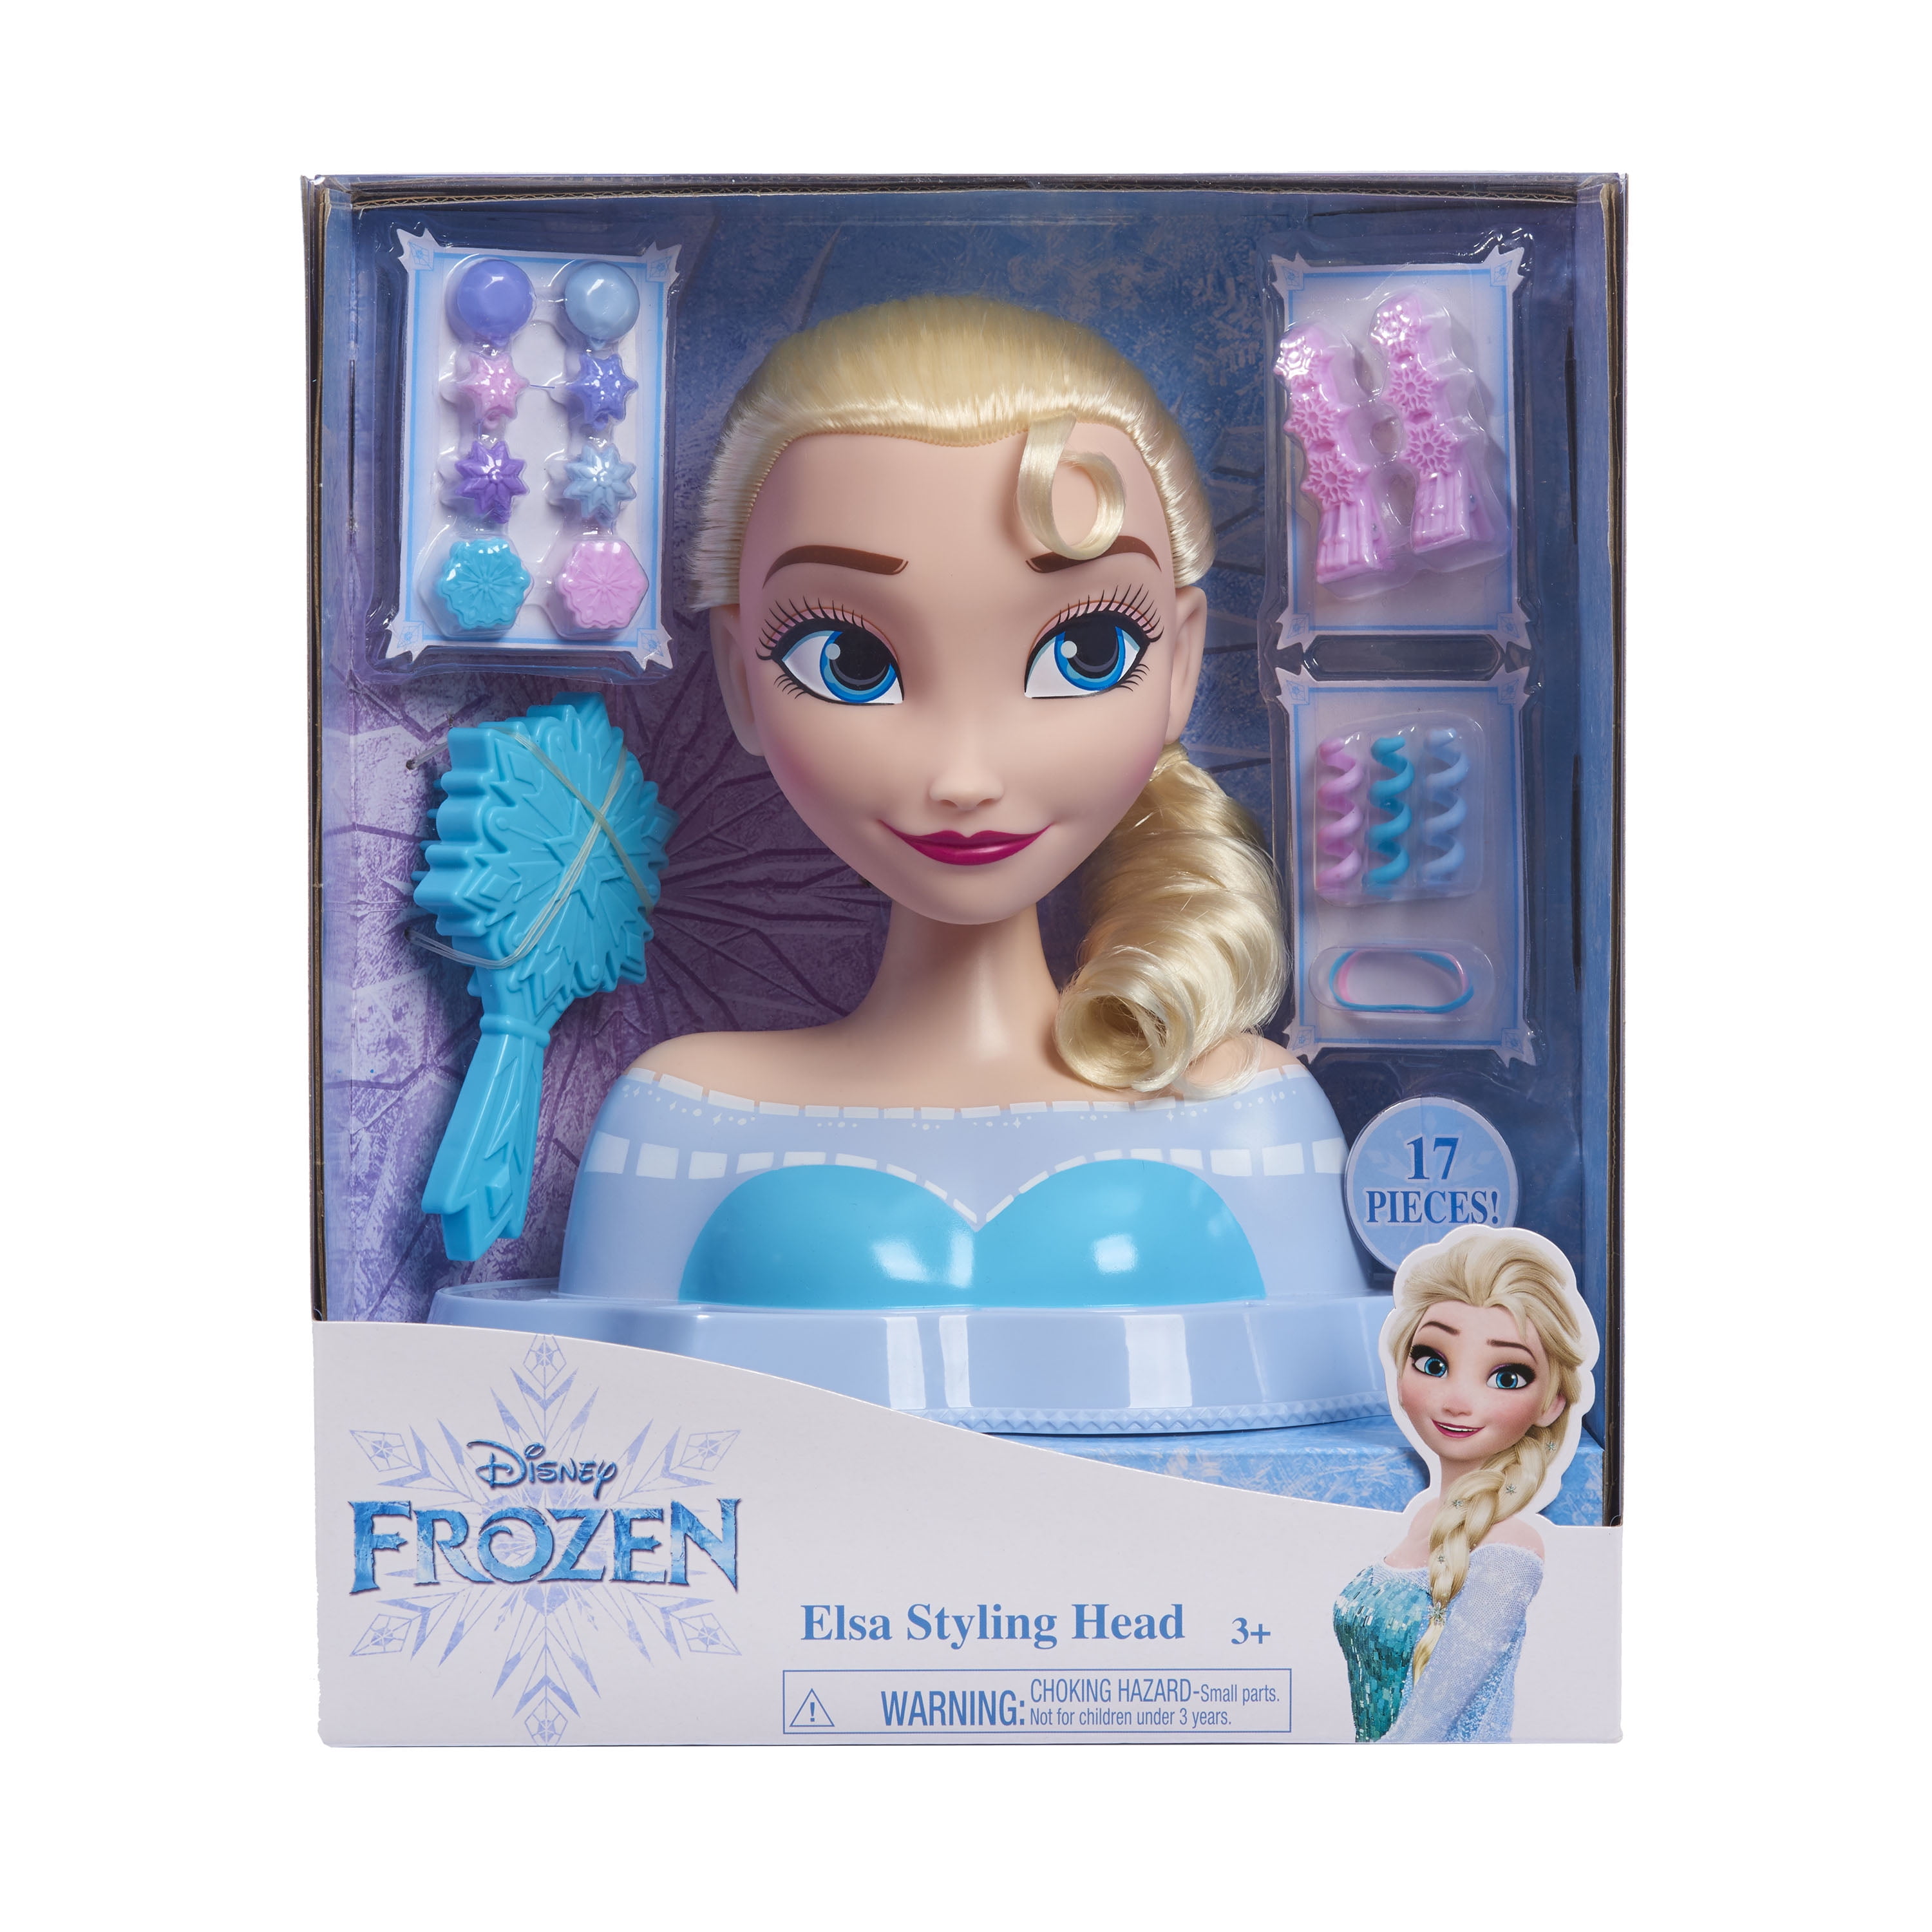 Disney Frozen 2  Elsa Styling Head  Toy Disney Princess Brush Style Her Hair 